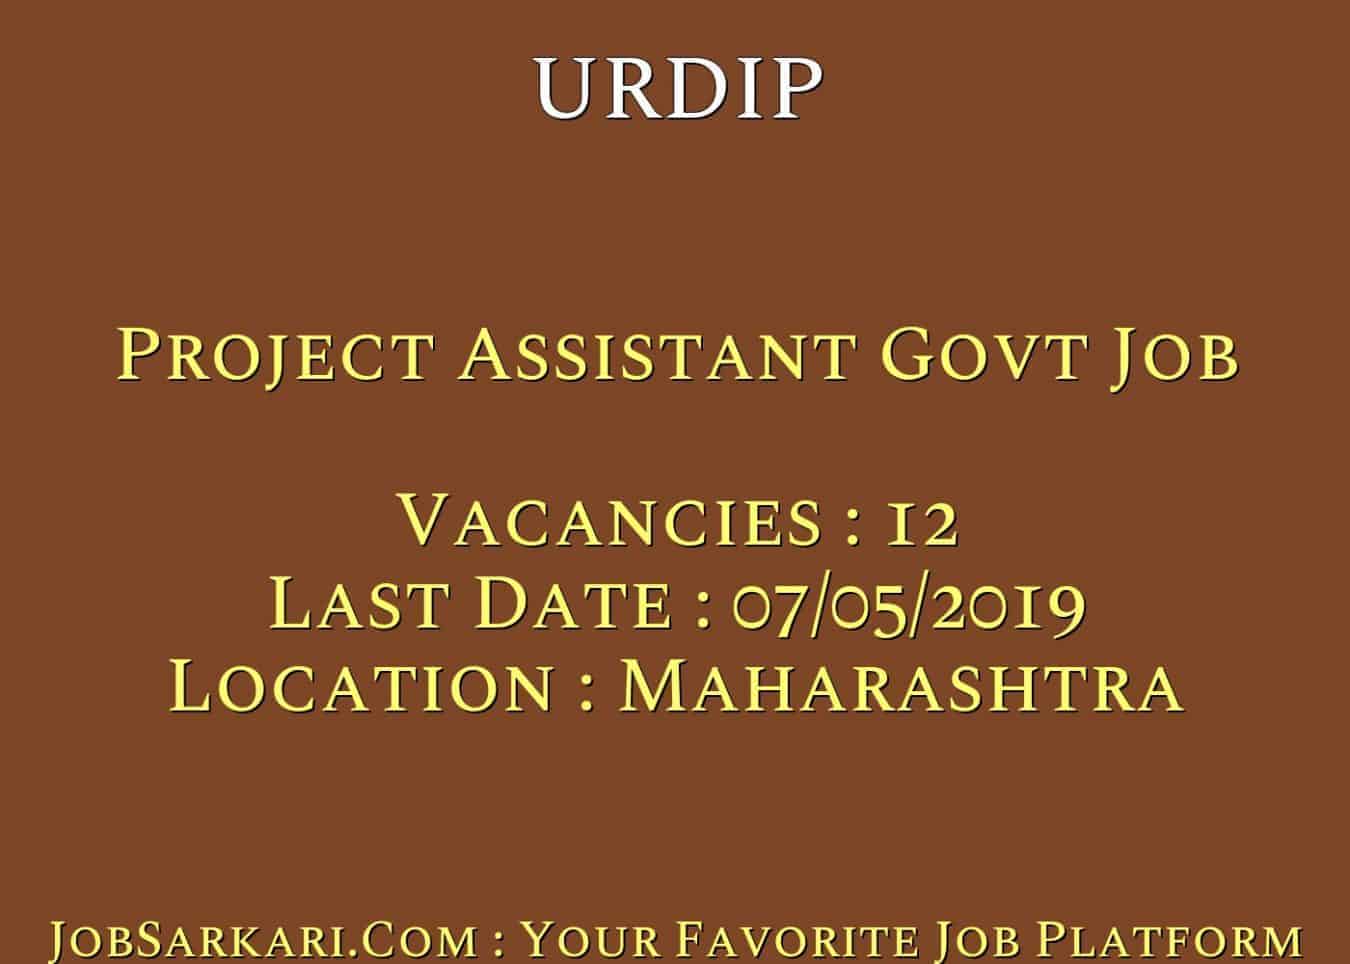 URDIP Recruitment 2019 For Project Assistant Govt Job